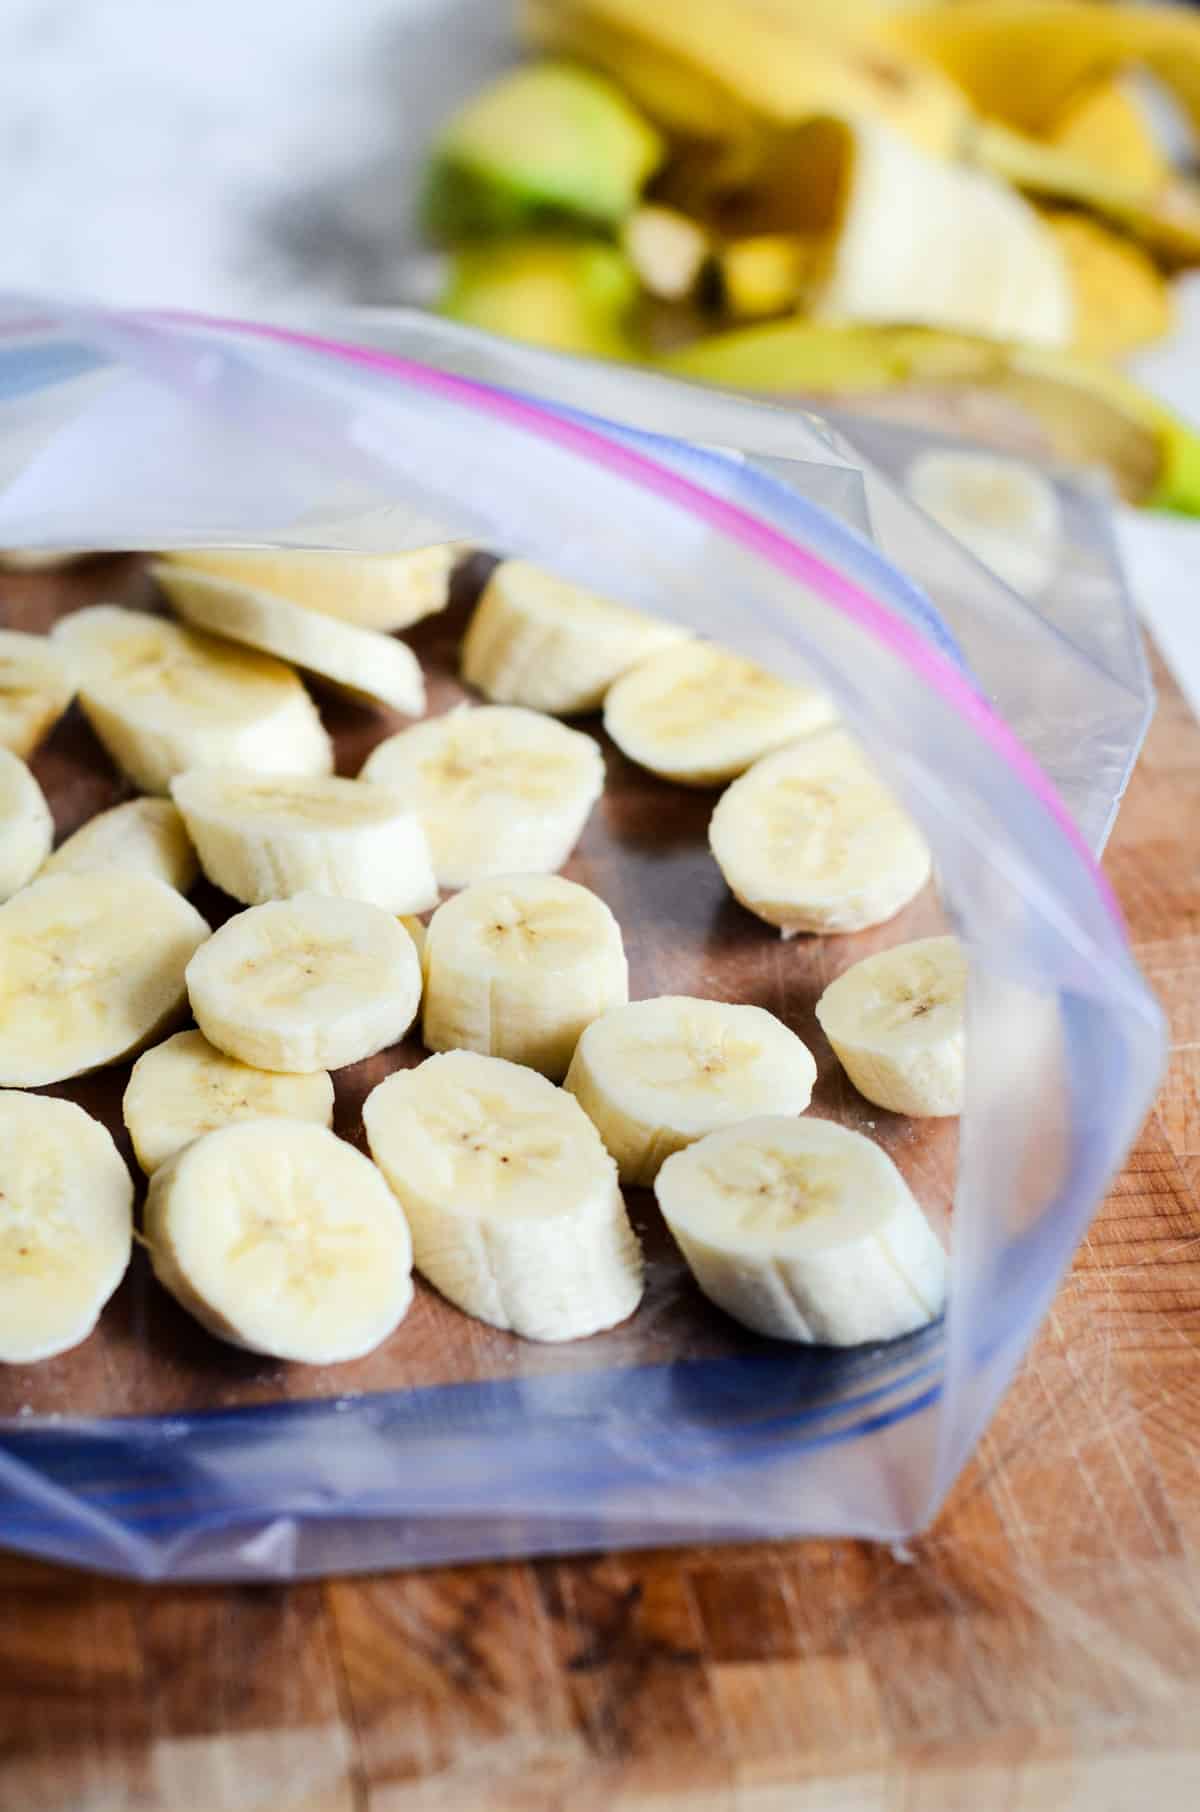 Sliced bananas in a ziplock bag.